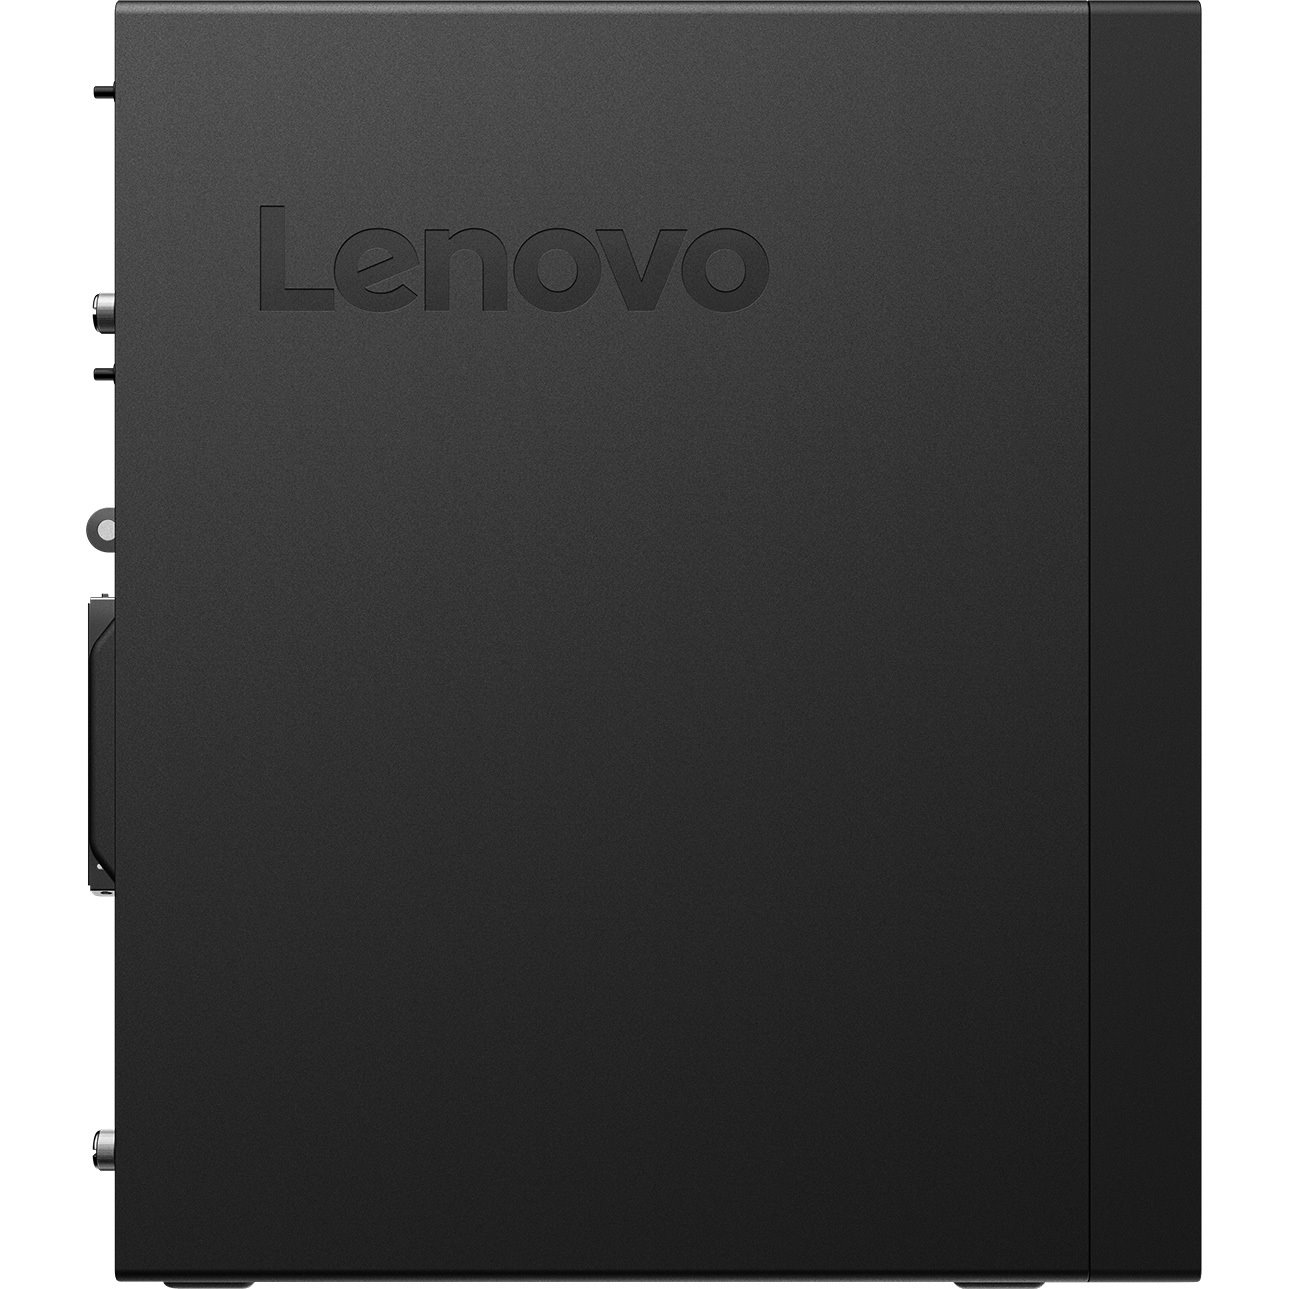 Lenovo ThinkStation P330 30CY000BUS Workstation - 1 x Intel Core i7 9th Gen i7-9700K - 32 GB - 512 GB SSD - Tower - Raven Black